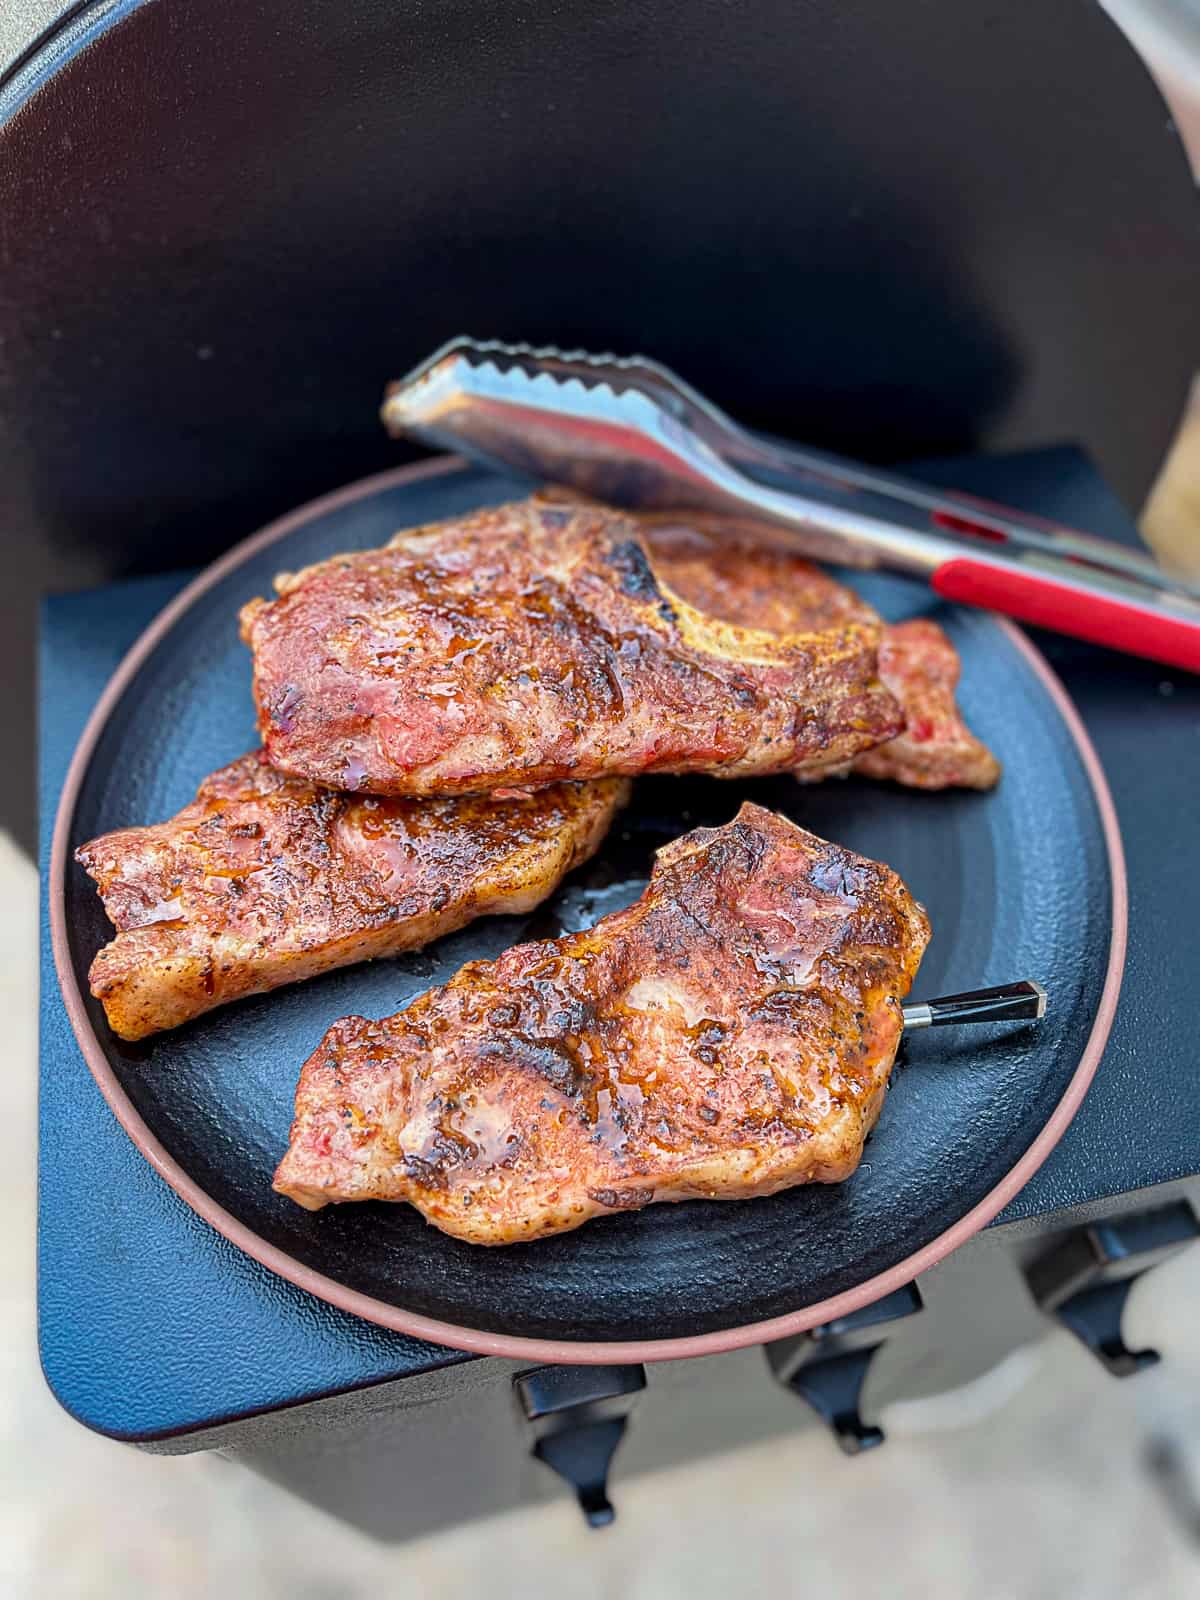 1 inch thick smoked Traeger Bone In Pork Chops Recipe